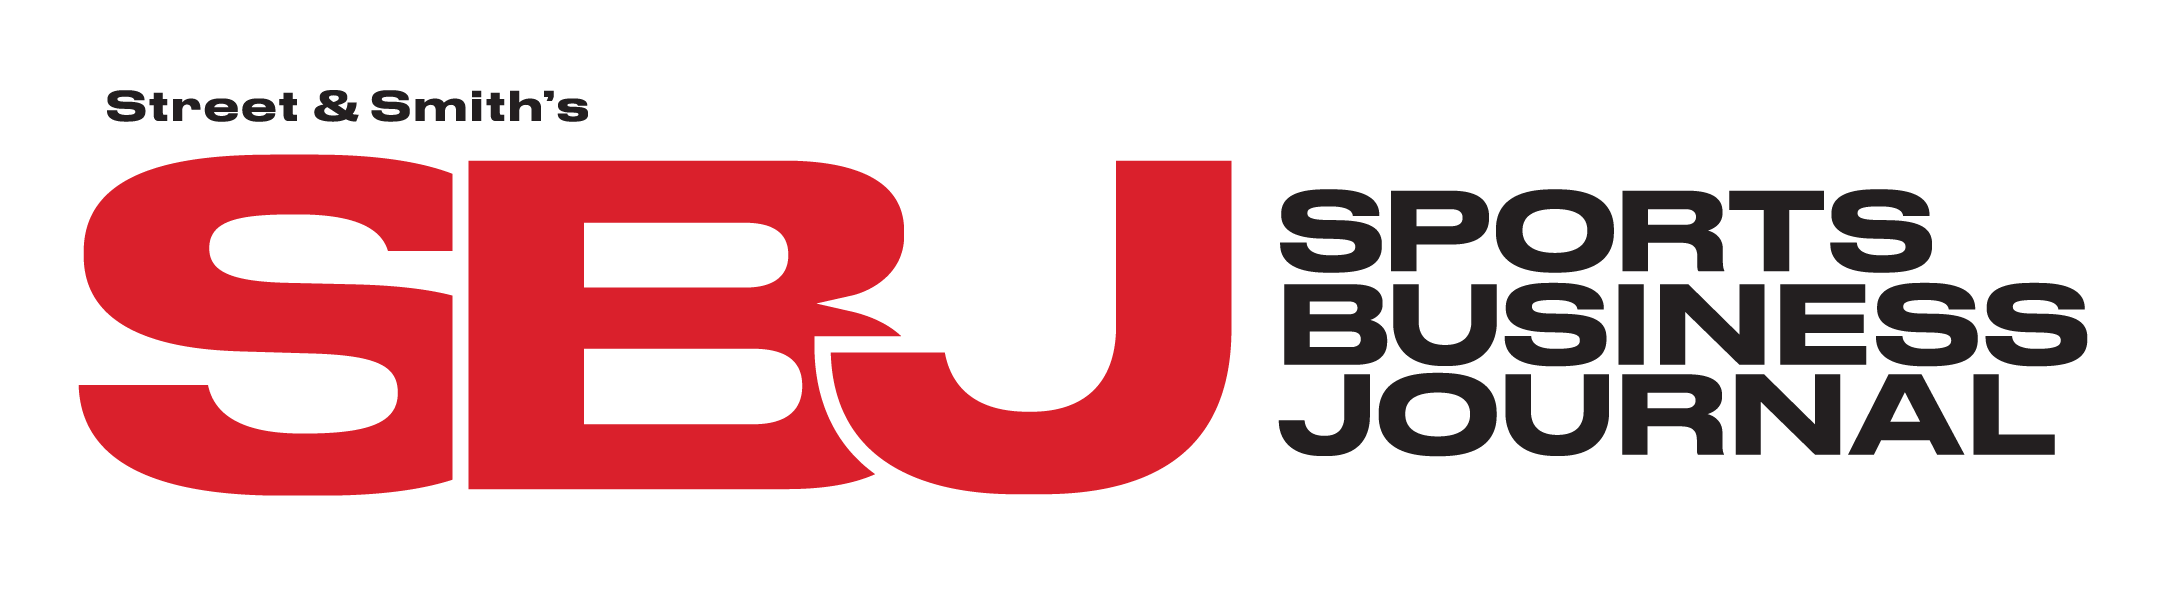 SBJ Logo